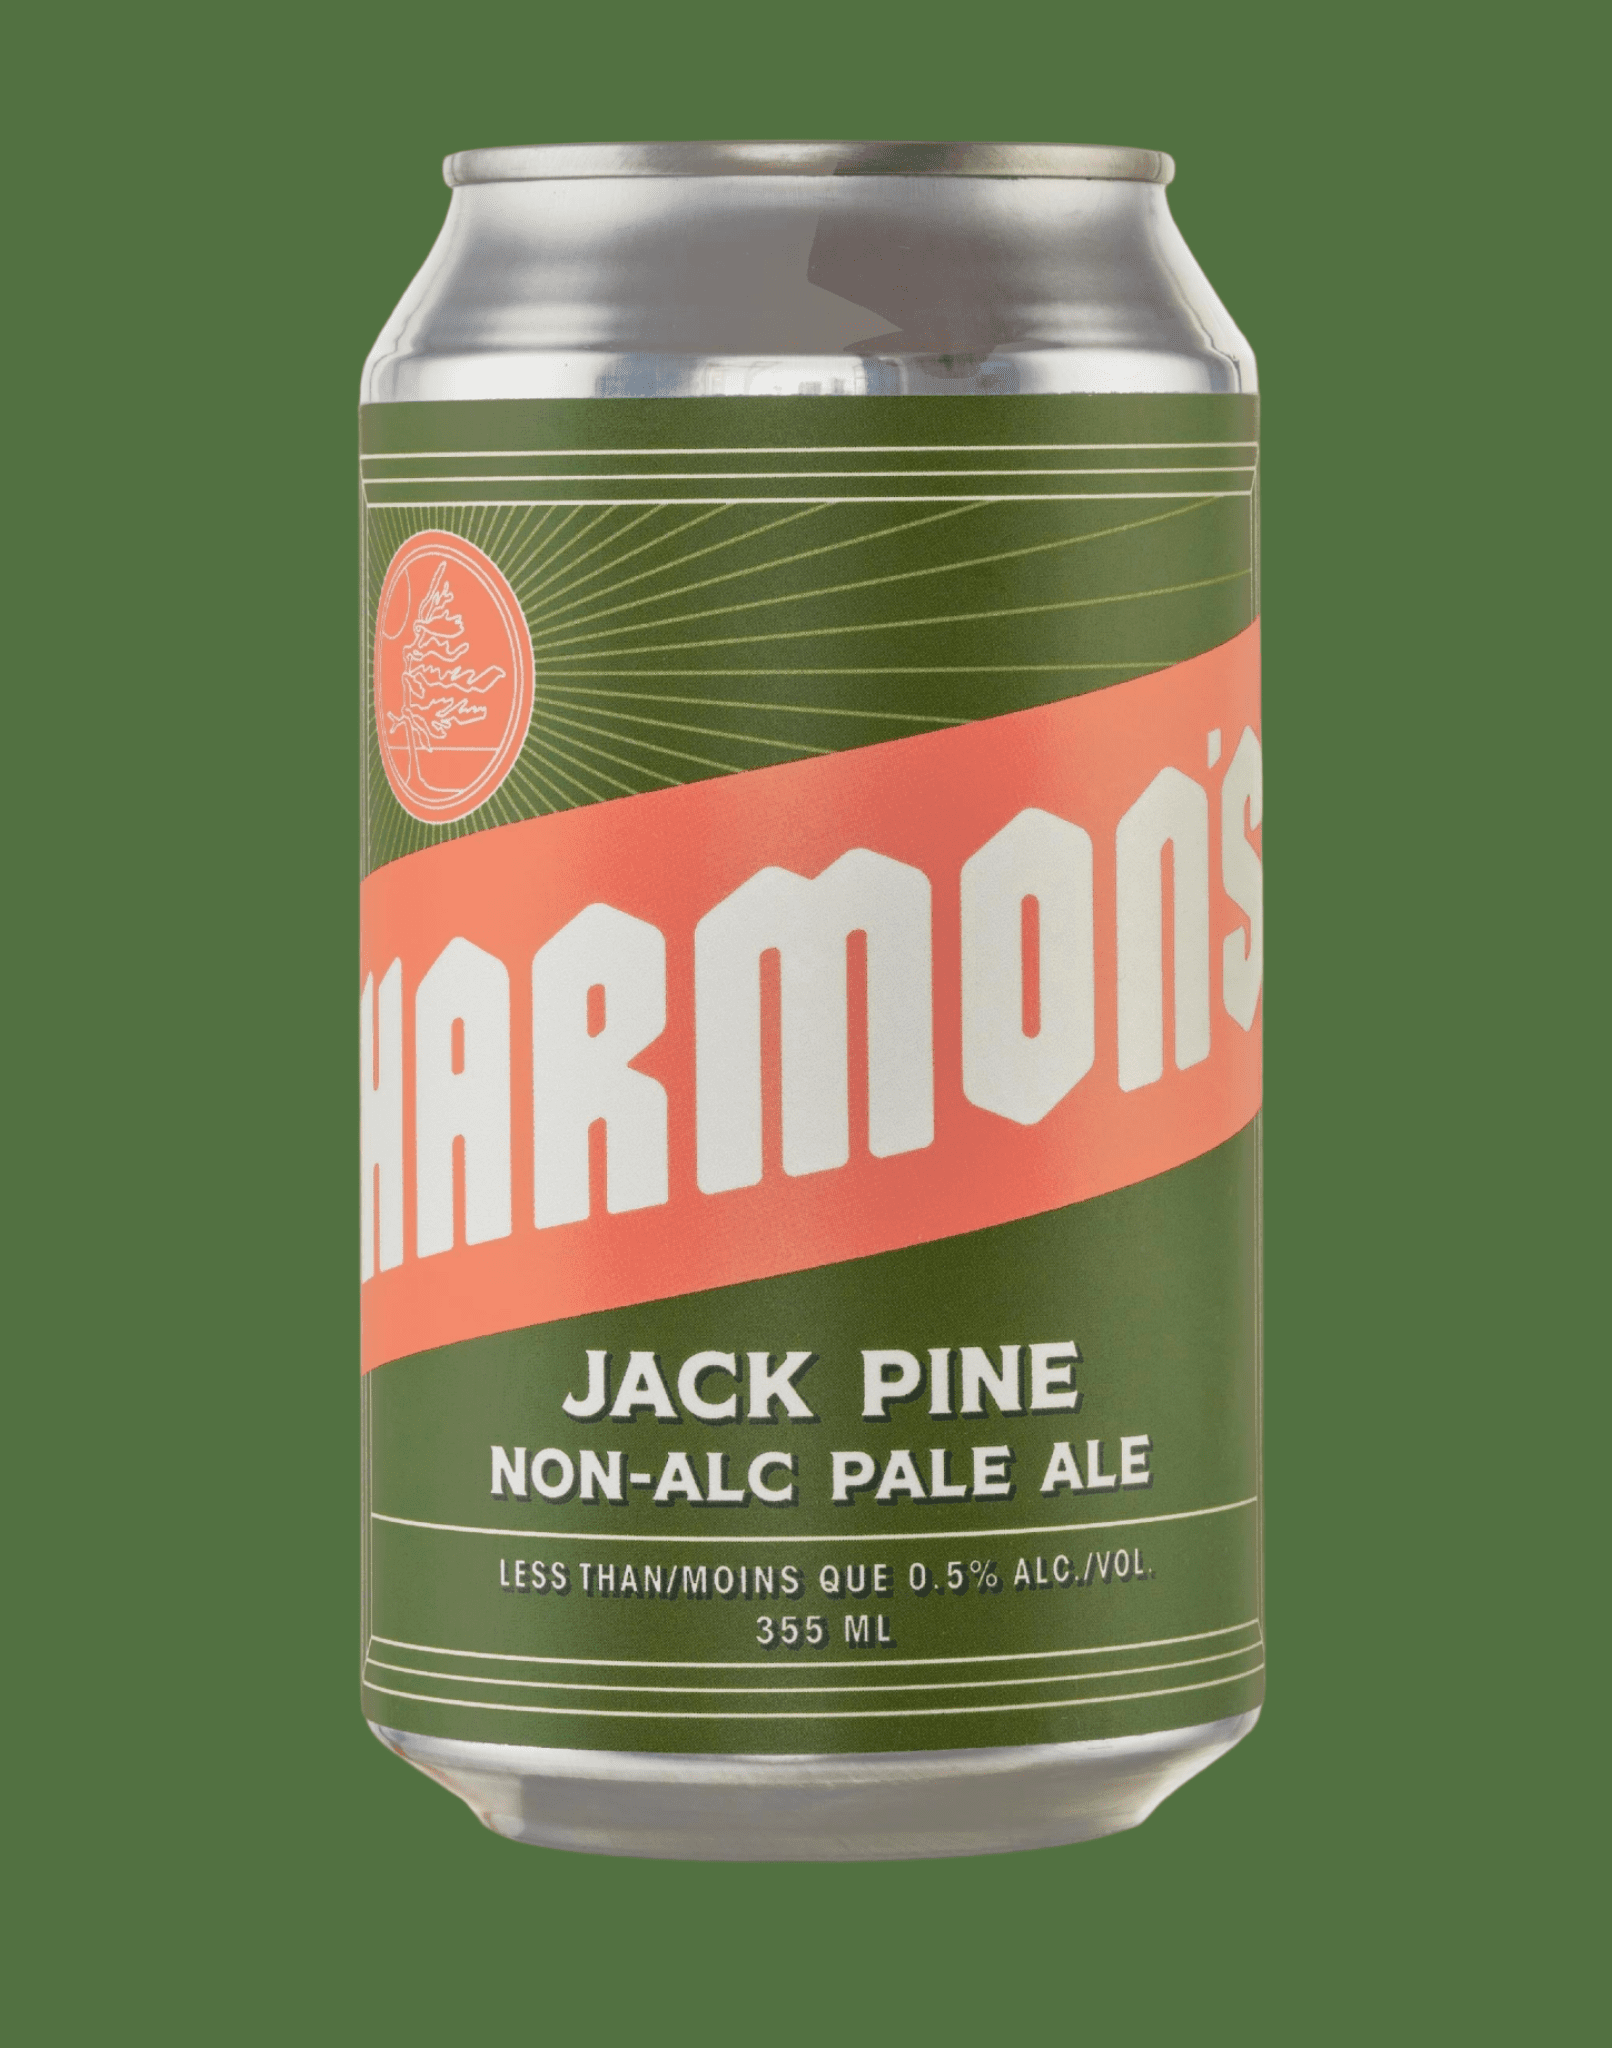 Harmon's Jack Pine Non-Alc Pale Ale